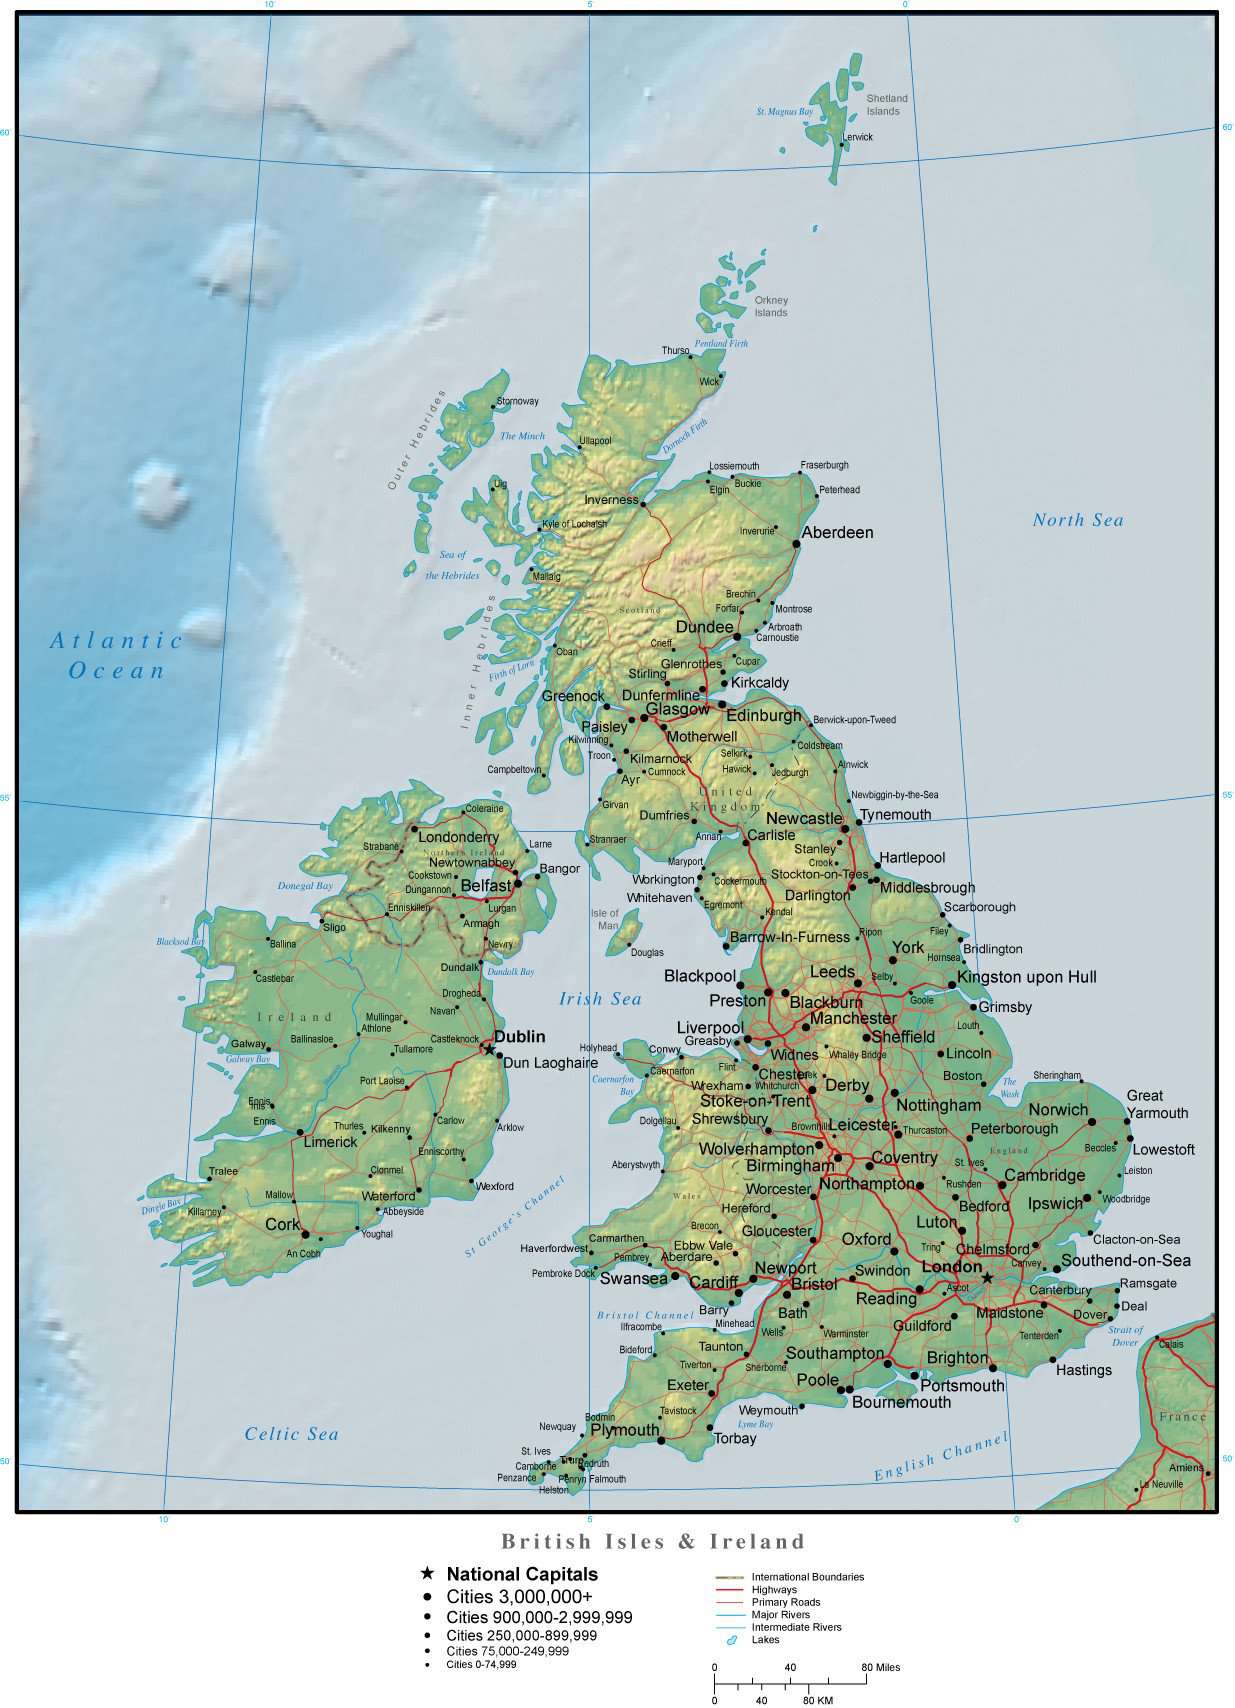 Digital United Kingdom Terrain Map In Adobe Illustrator Vector Format